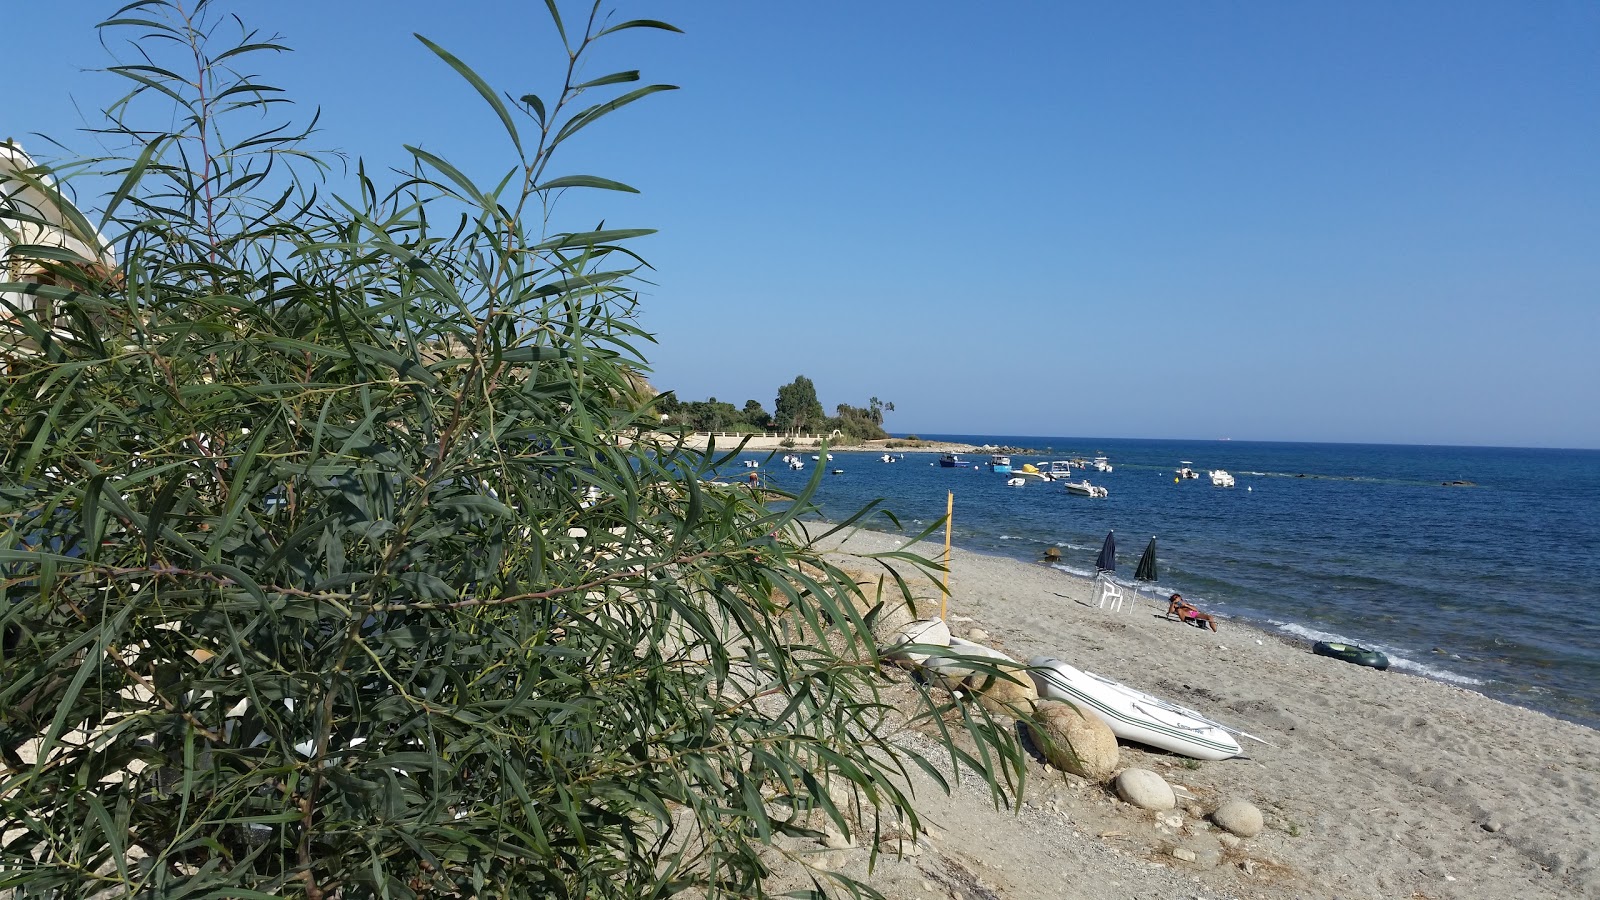 Ultima Spiaggia II'in fotoğrafı geniş plaj ile birlikte